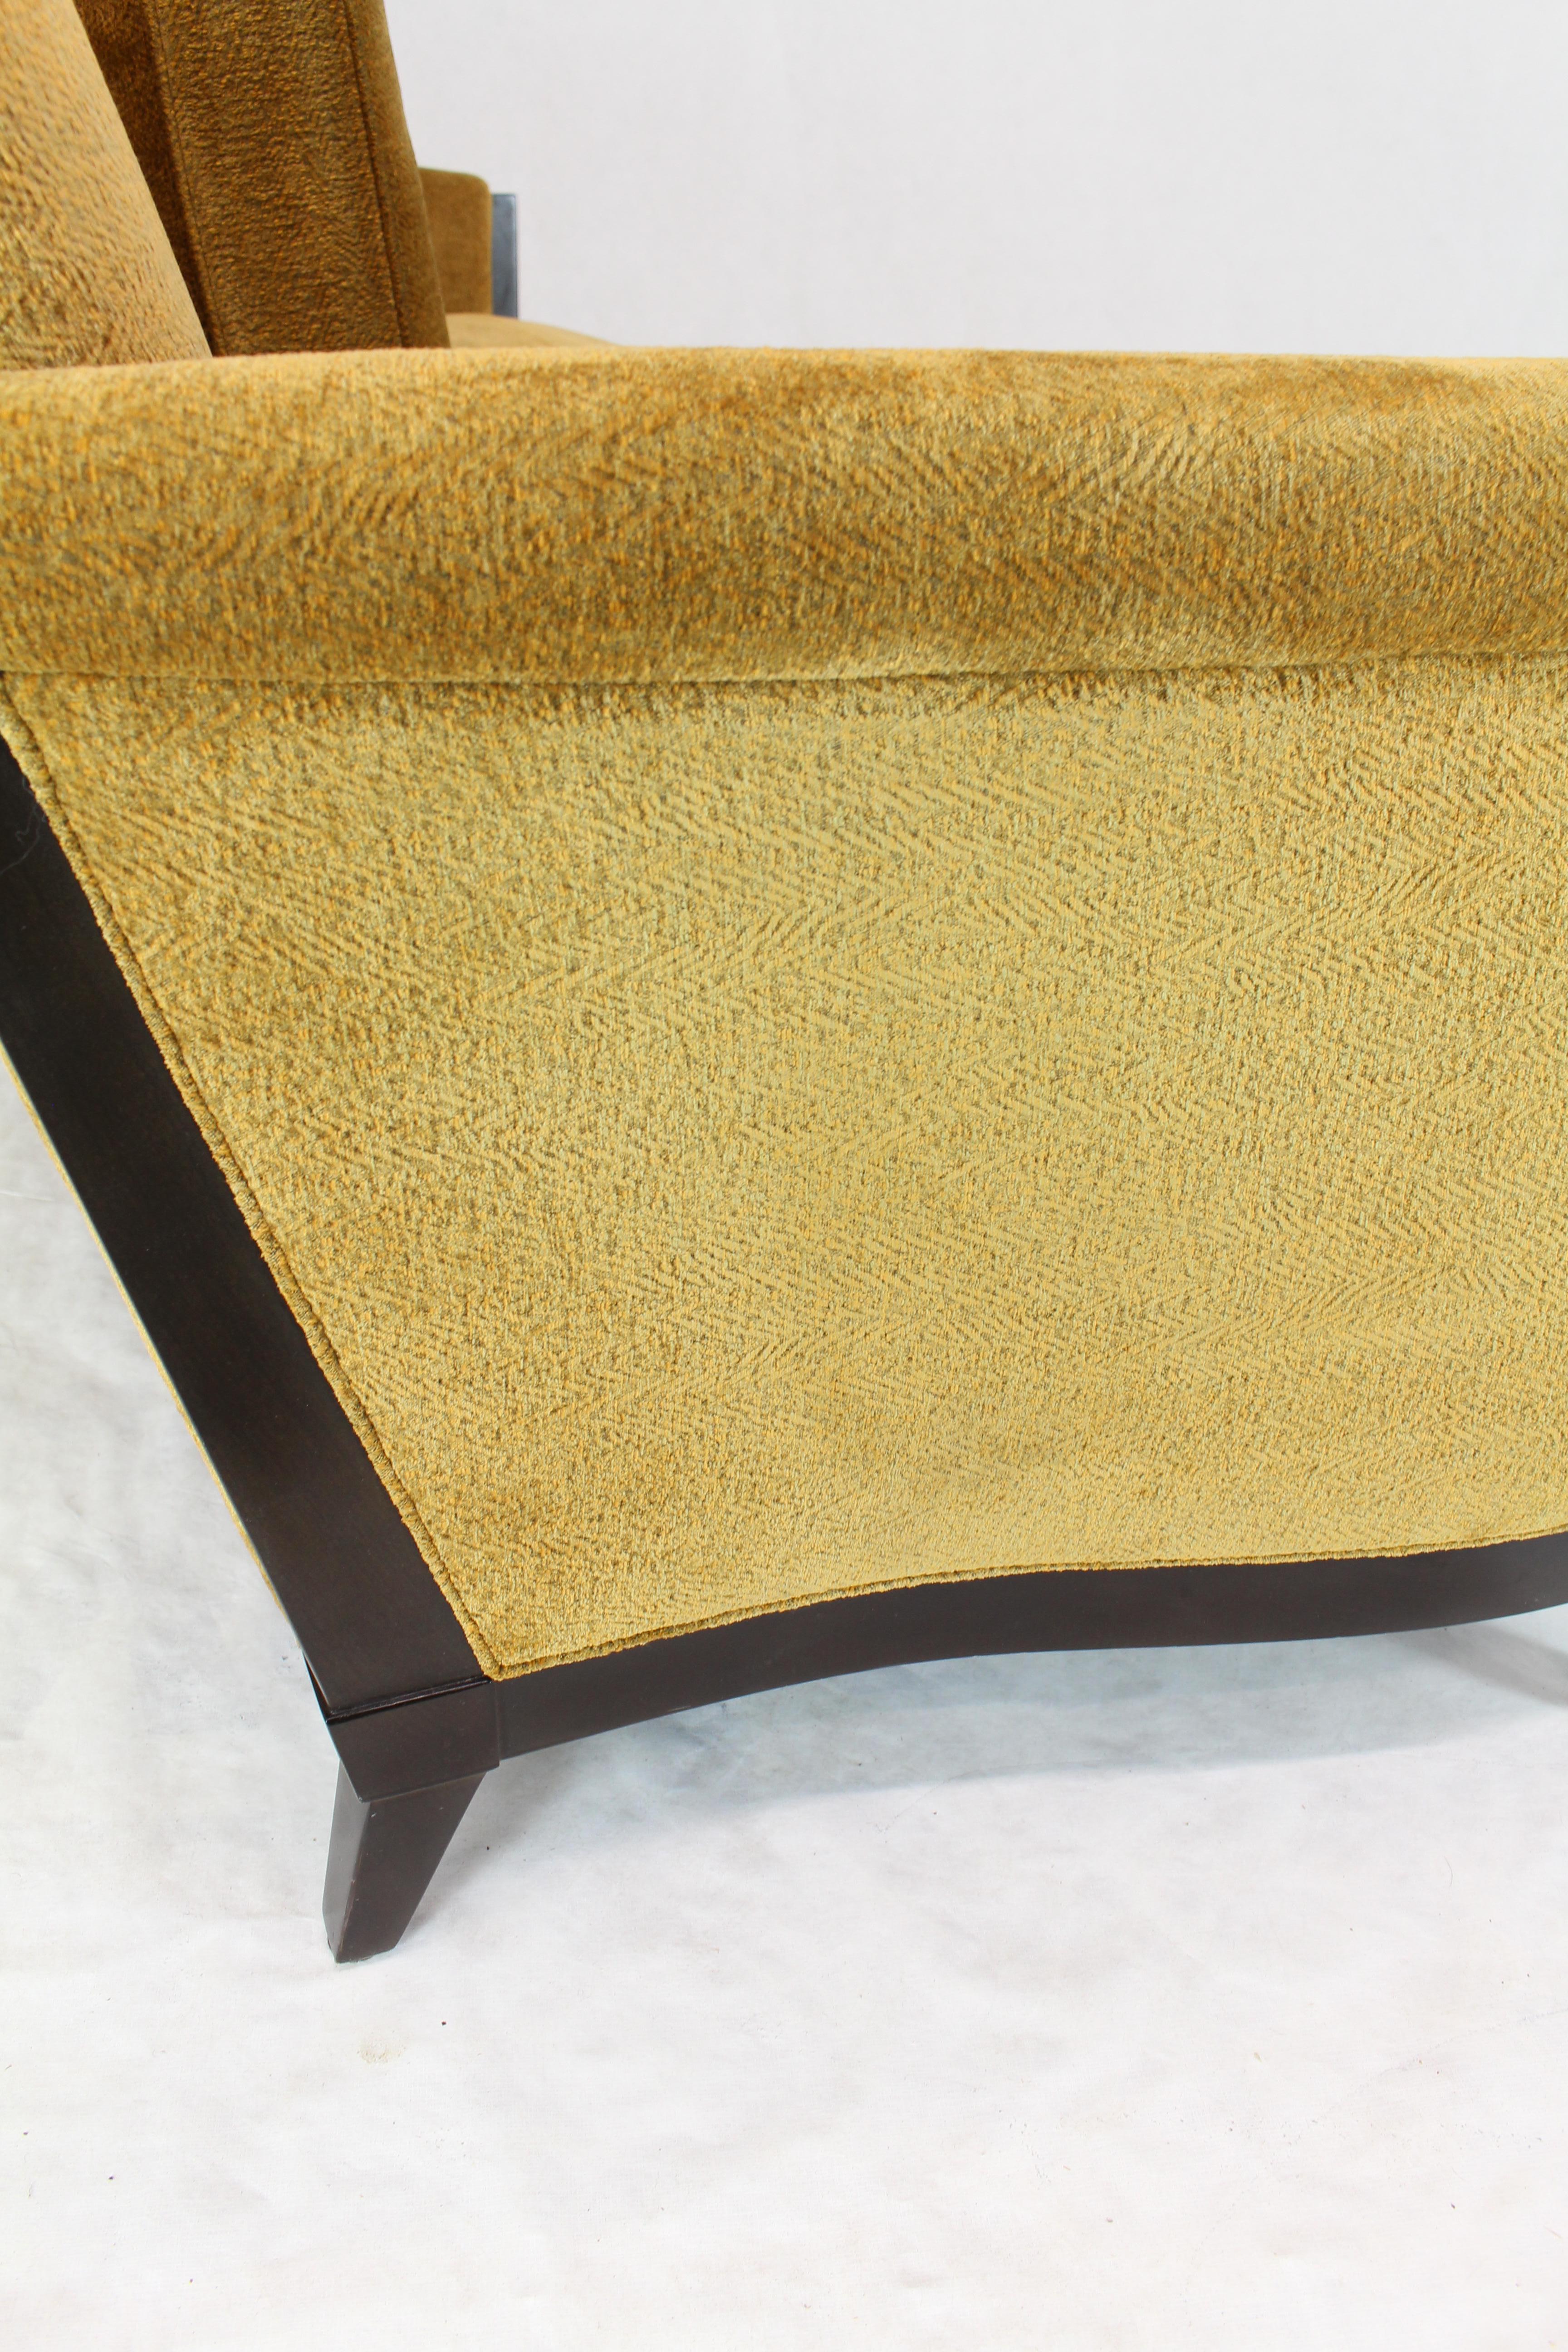 Dinghy Modern Luxury Sofa Chenille Upholstery Dark Chocolate Frame Finish For Sale 4